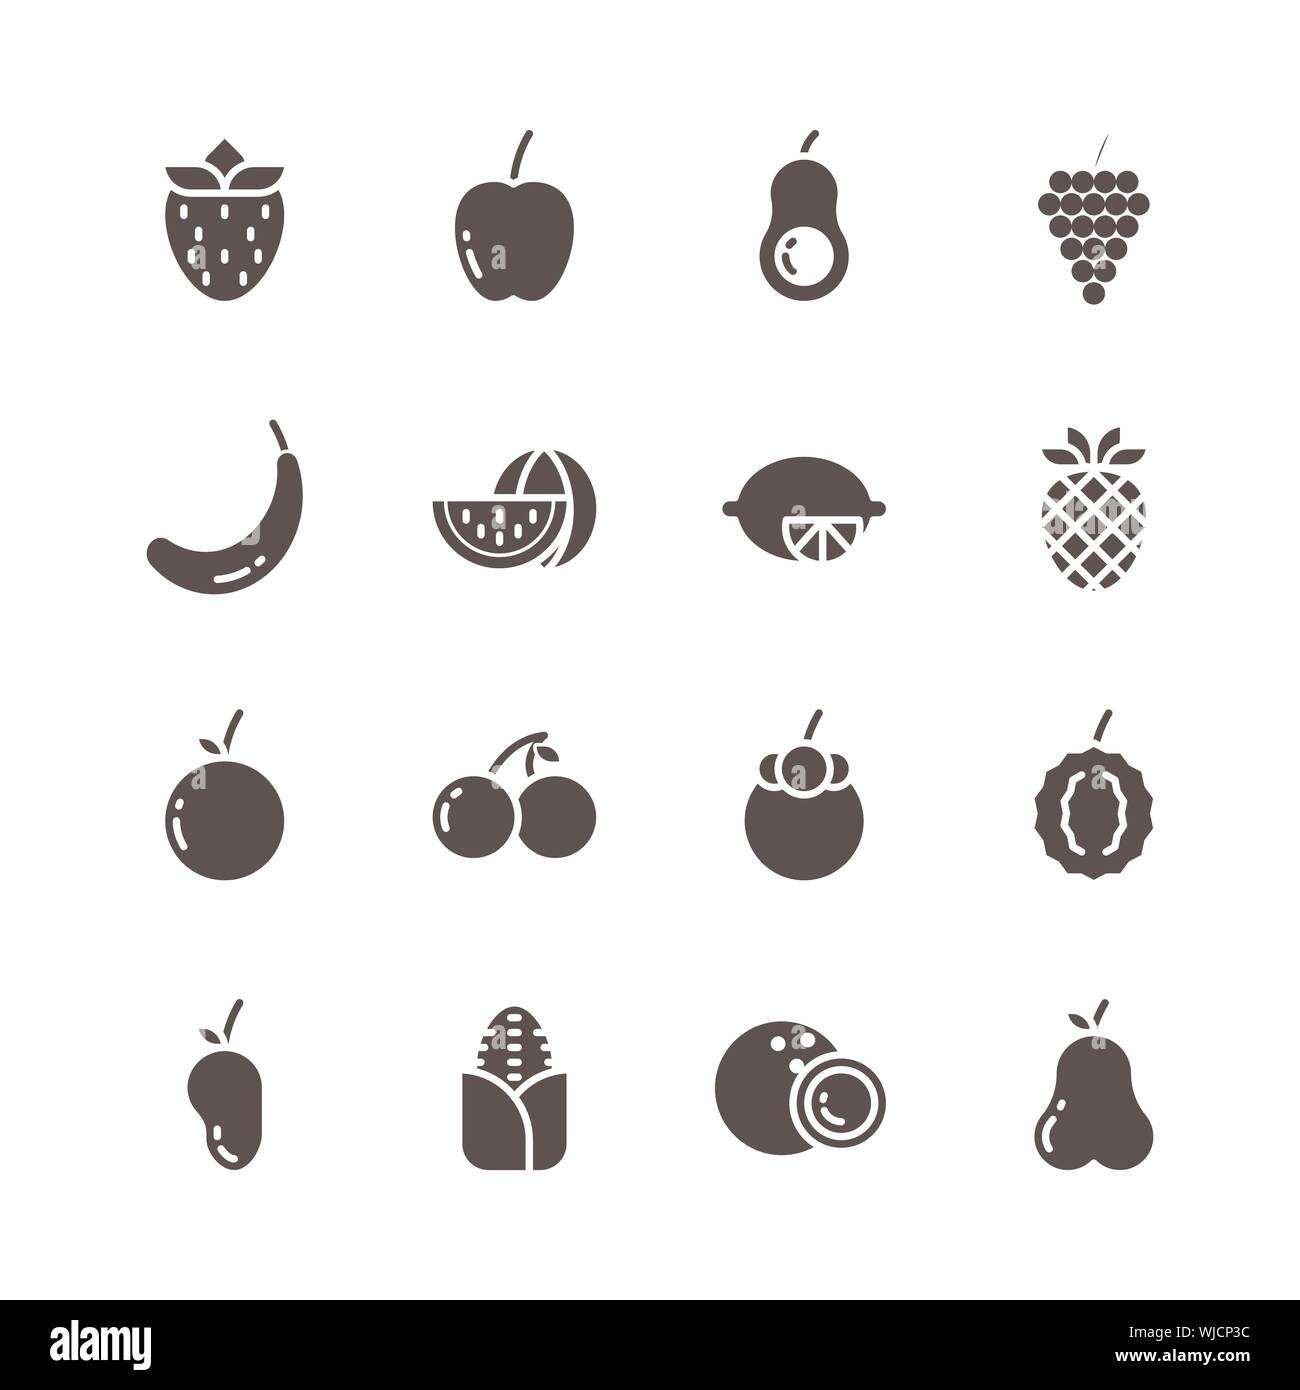 Fruits icon set.Vector illustration Stock Vector